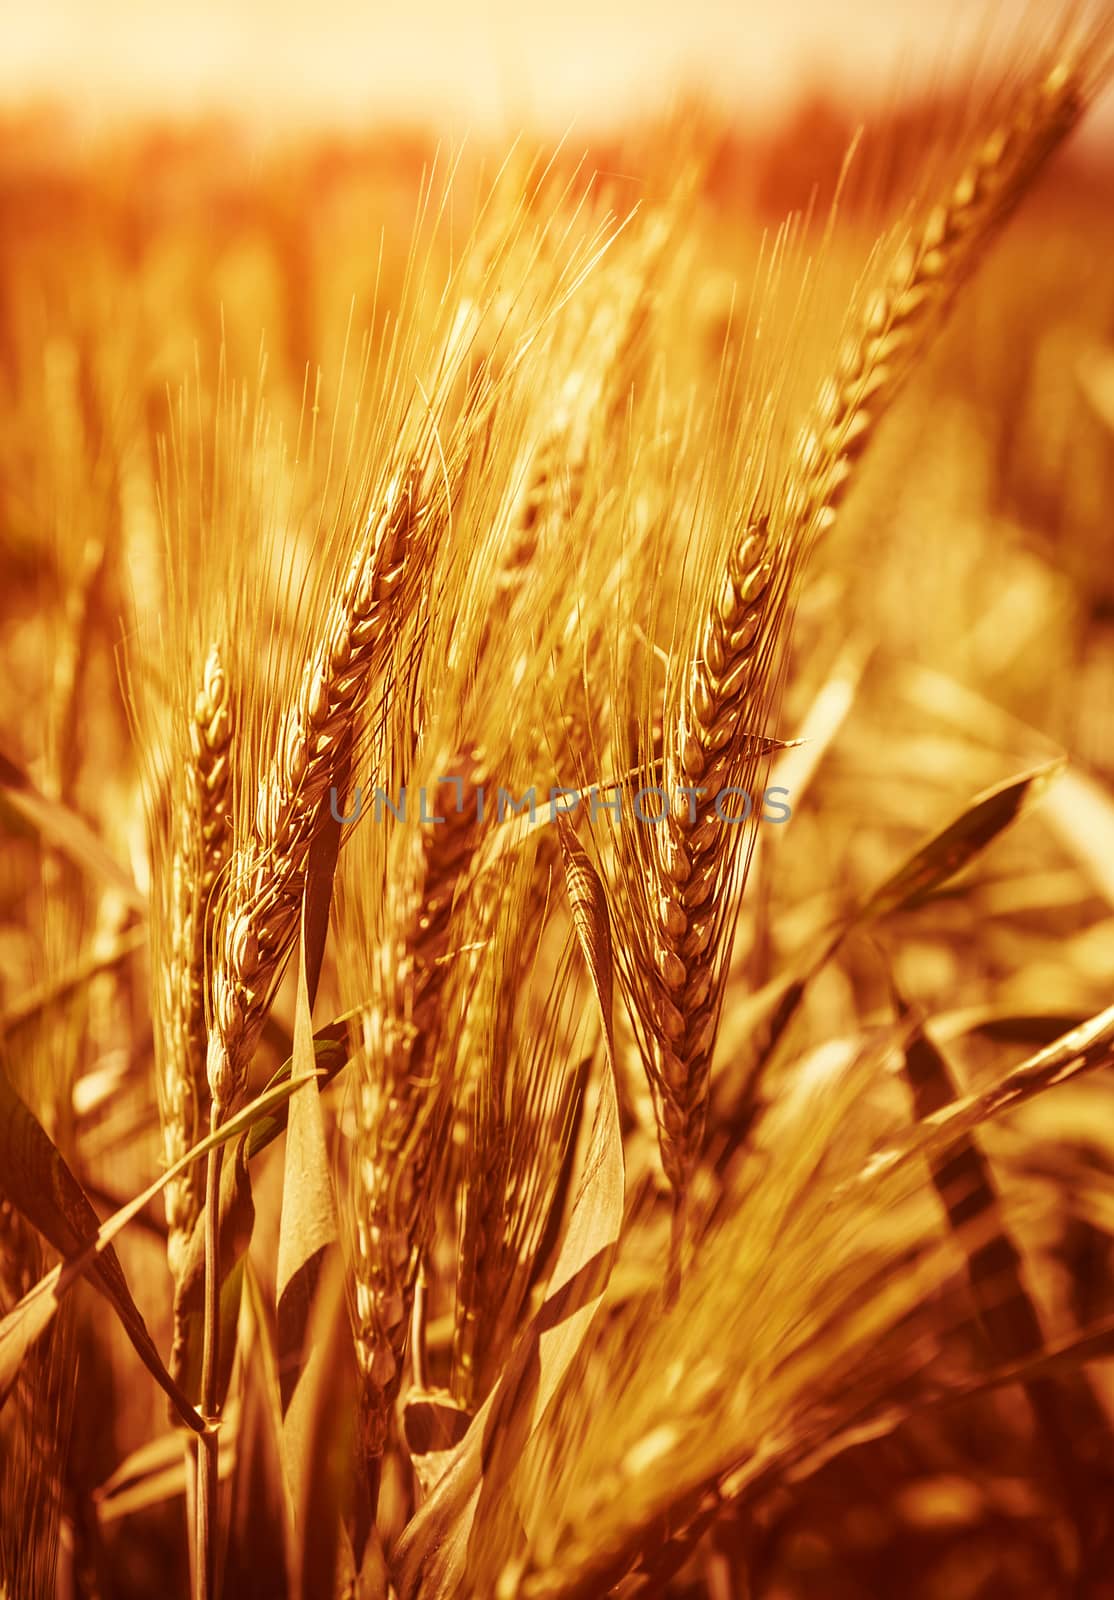 Wheat field background by Anna_Omelchenko